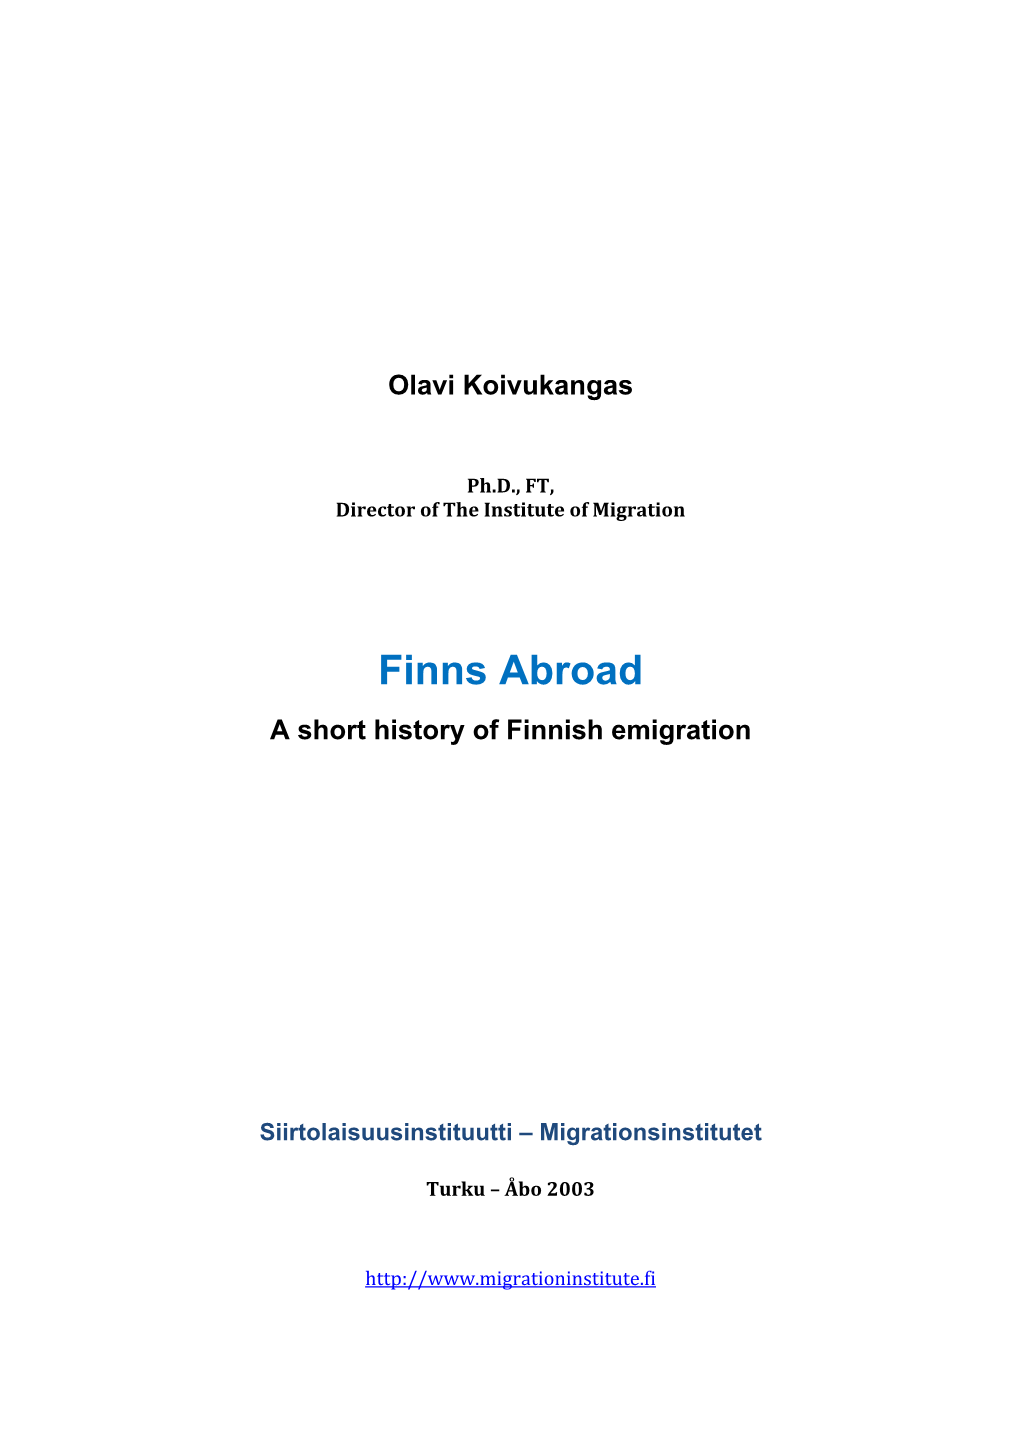 Finns Abroad a Short History of Finnish Emigration